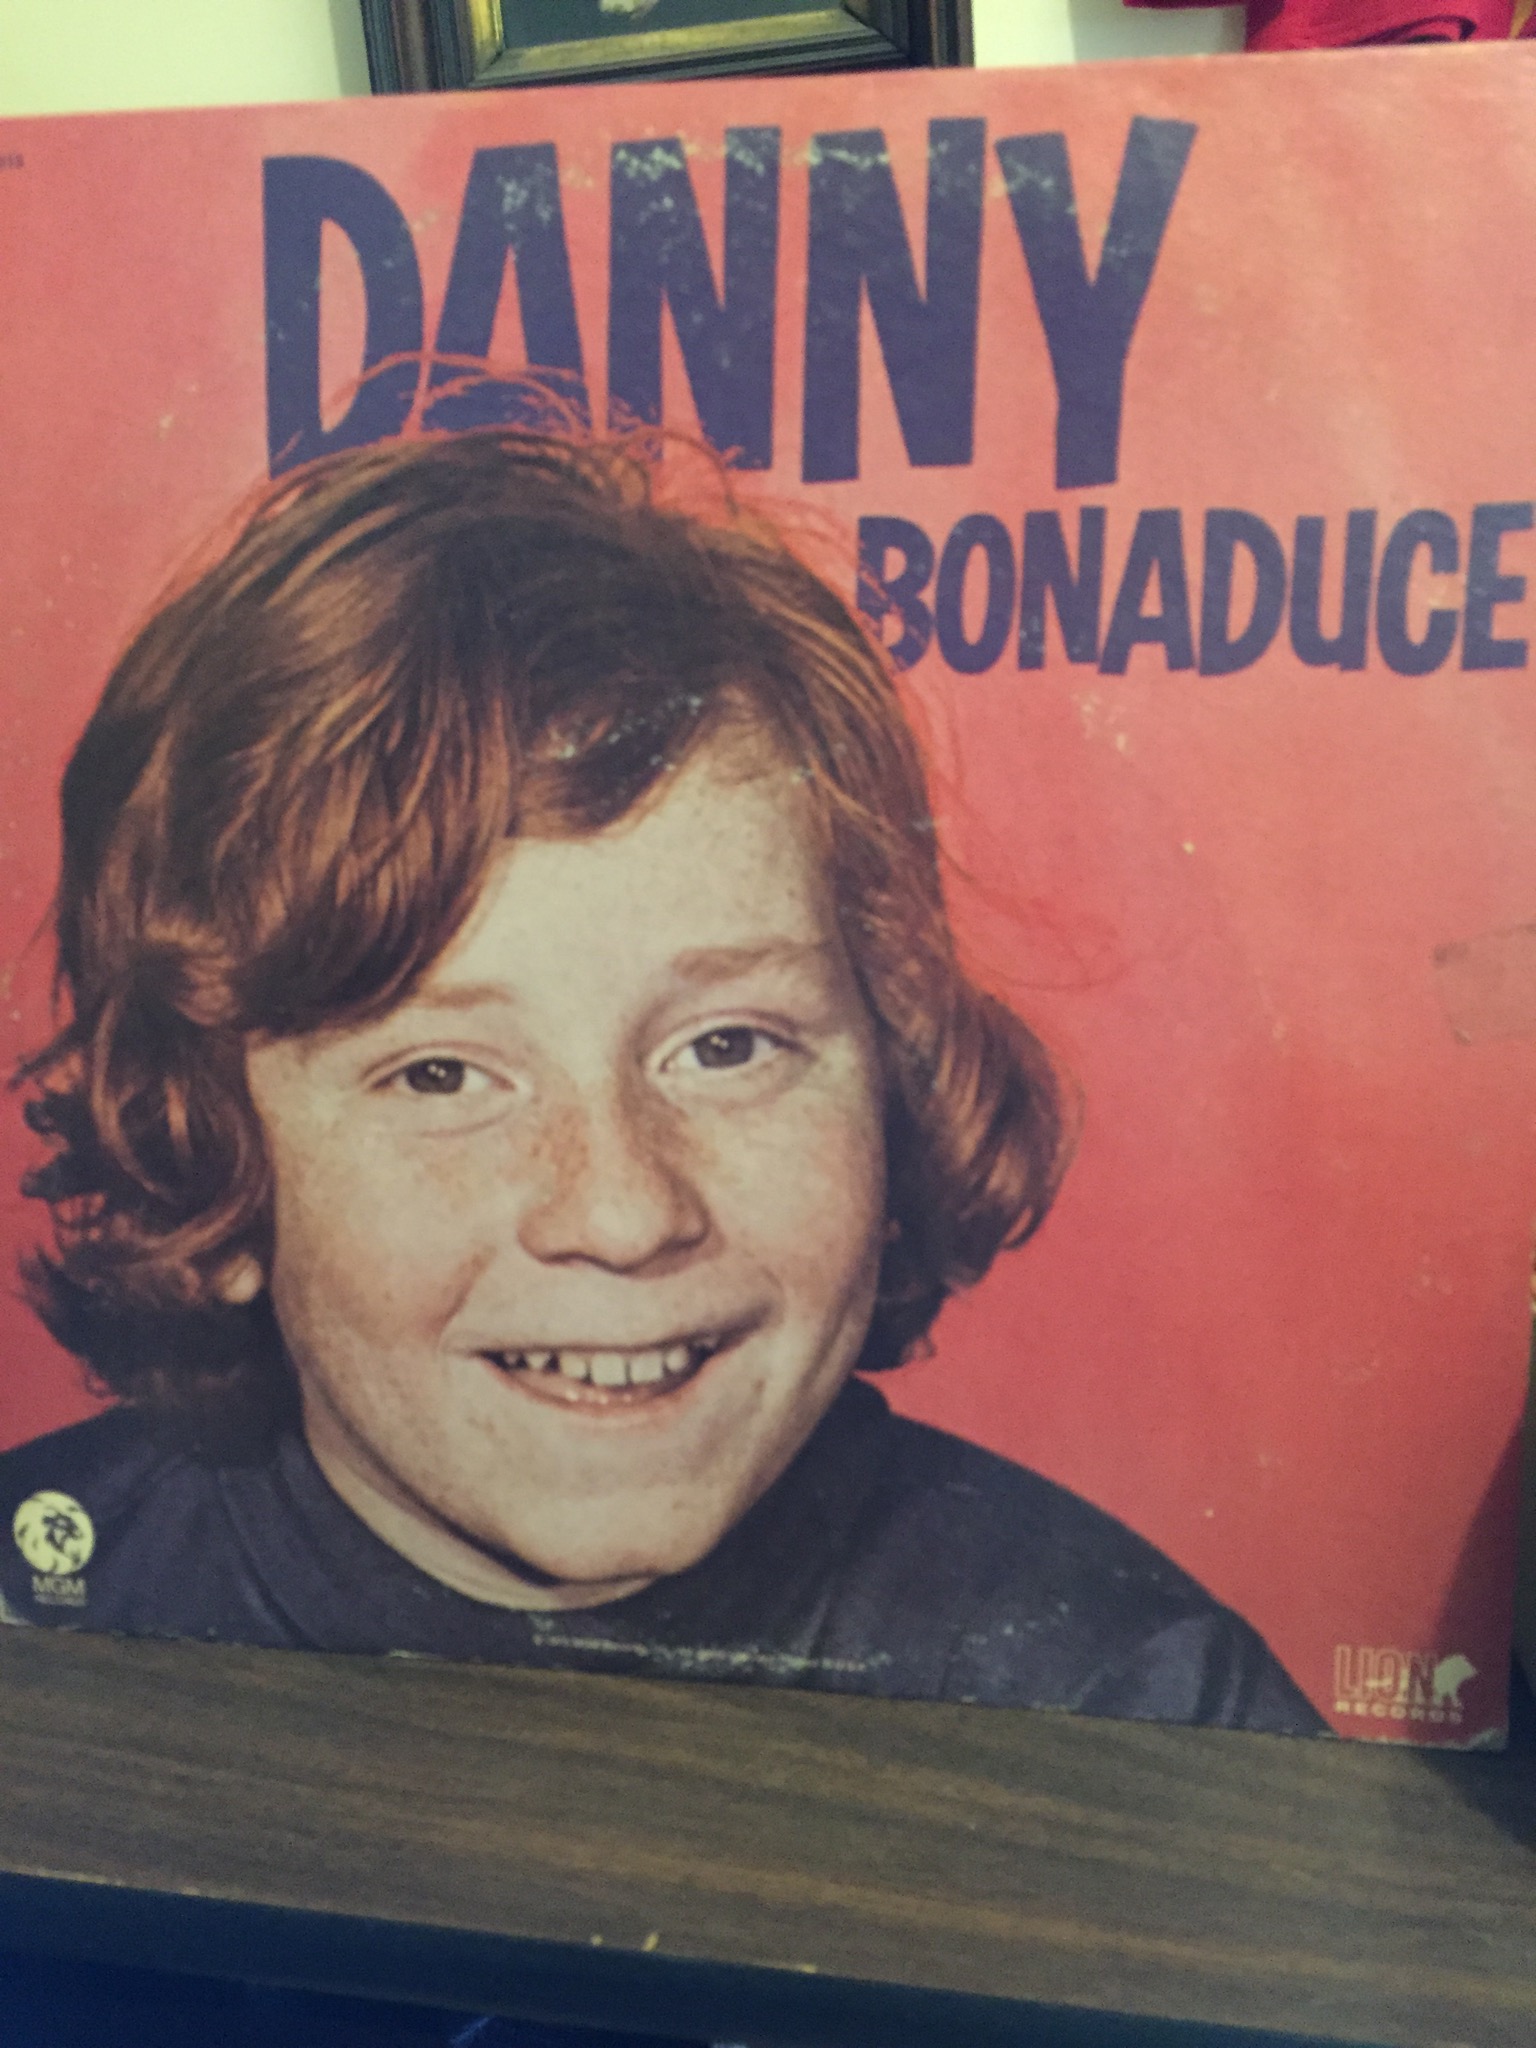  EV105 (S5E5) The Danny Bonaduce Album